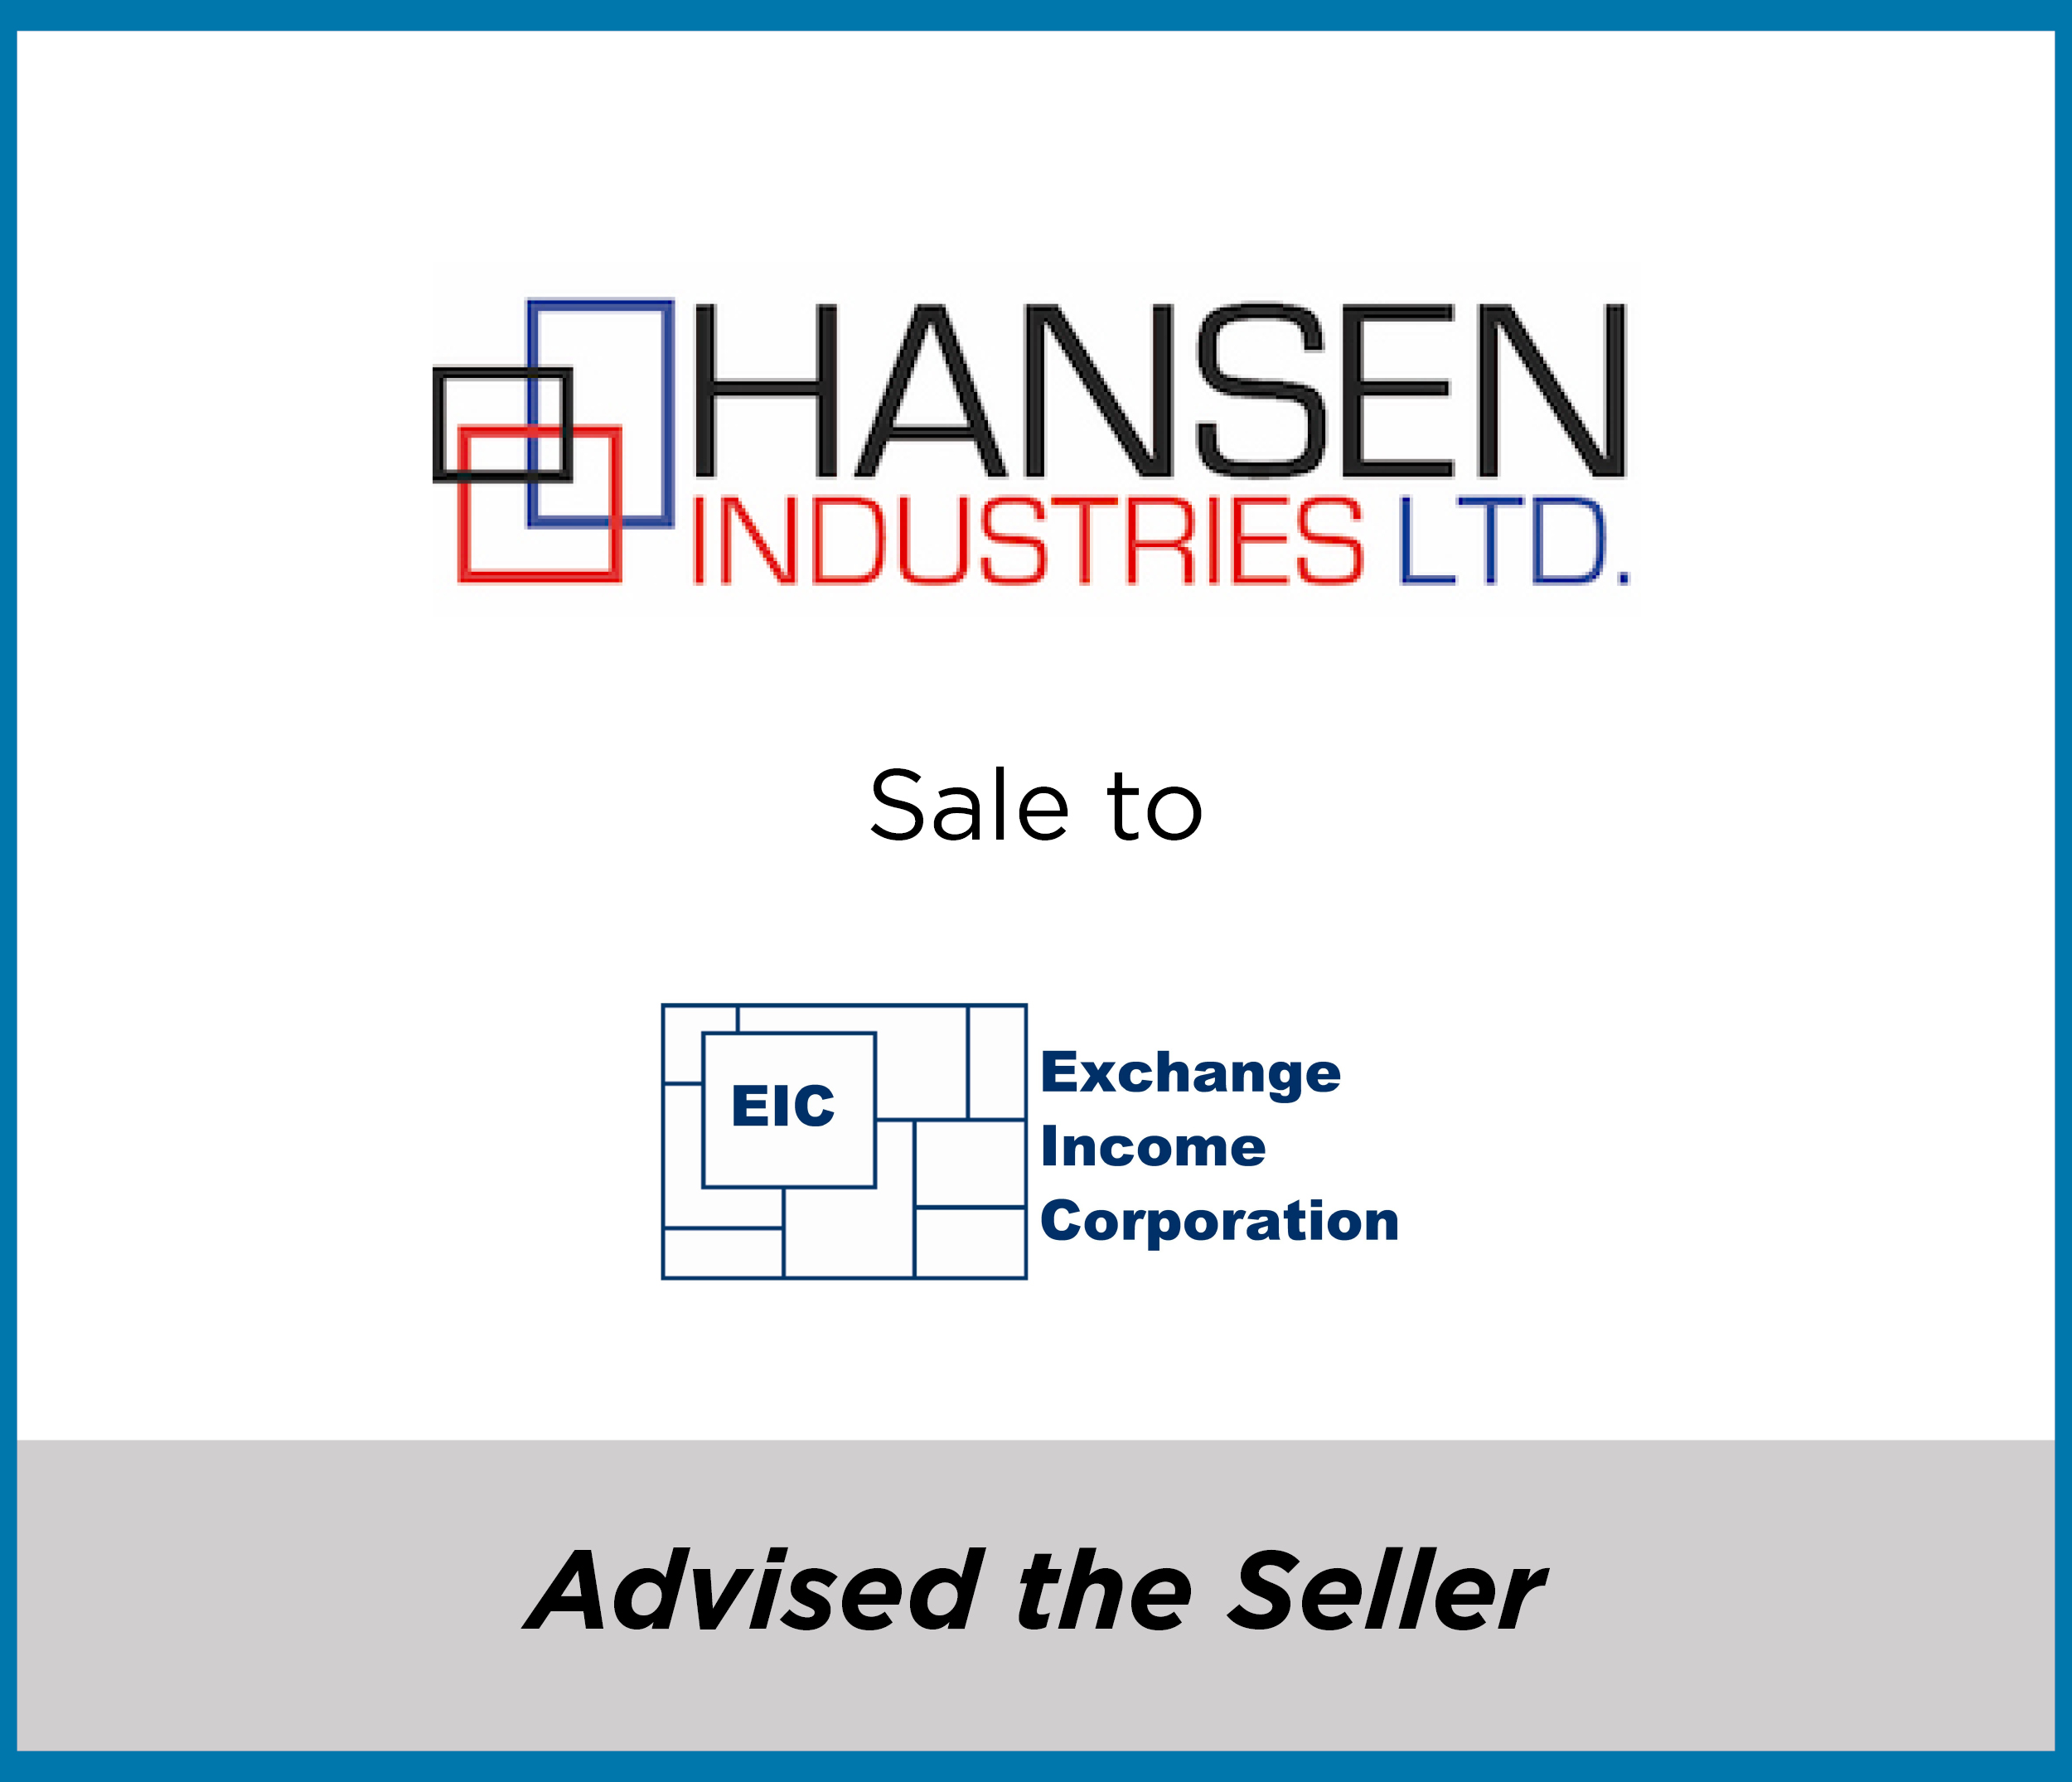 Hansen Industries Sale to Exchange Income Corporation